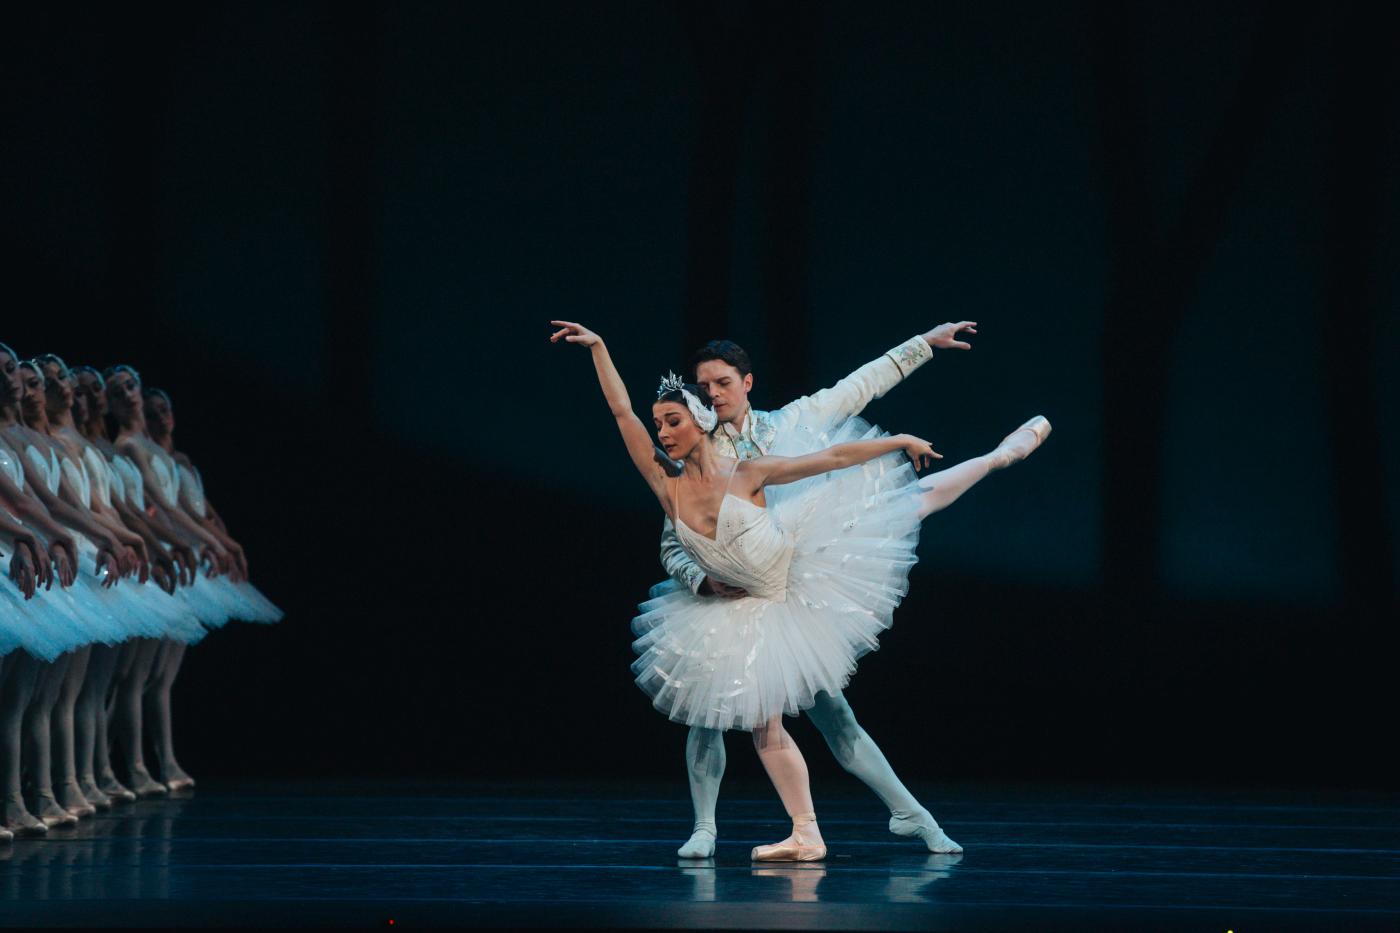 6. B.Bemet (Odette), J.Caley (Prince Siegfried), and ensemble, “Swan Lake” by A.Woolliams after M.Petipa, The Australian Ballet 2023 © K.Longley